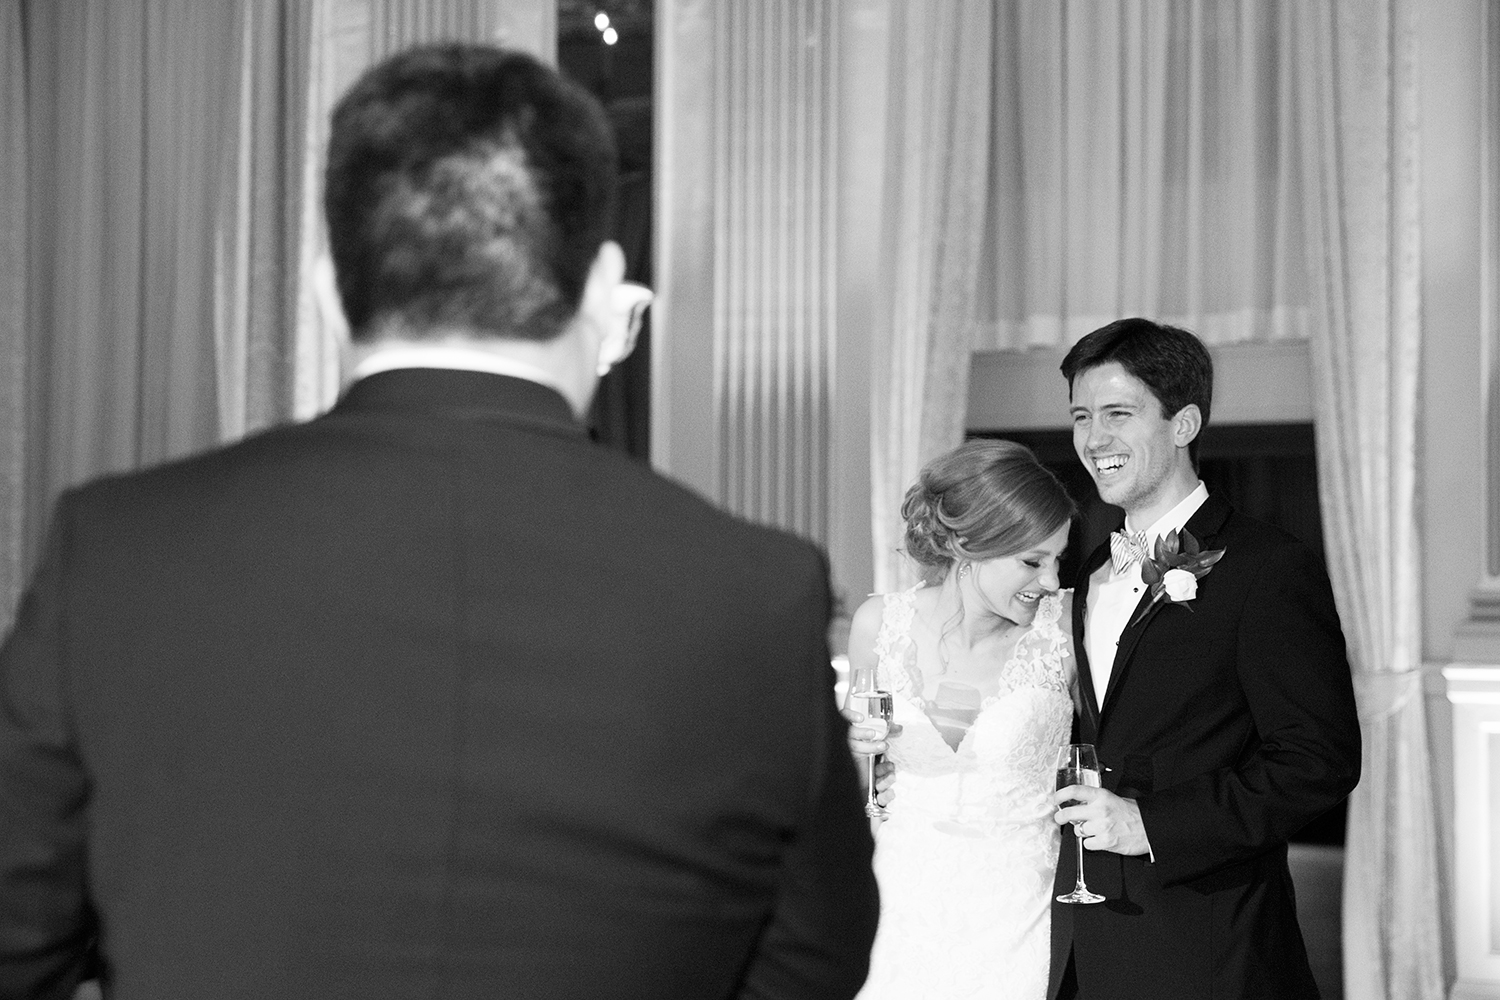 Noelle and Hunters Ballroom Wedding - Image Property of www.j-dphoto.com